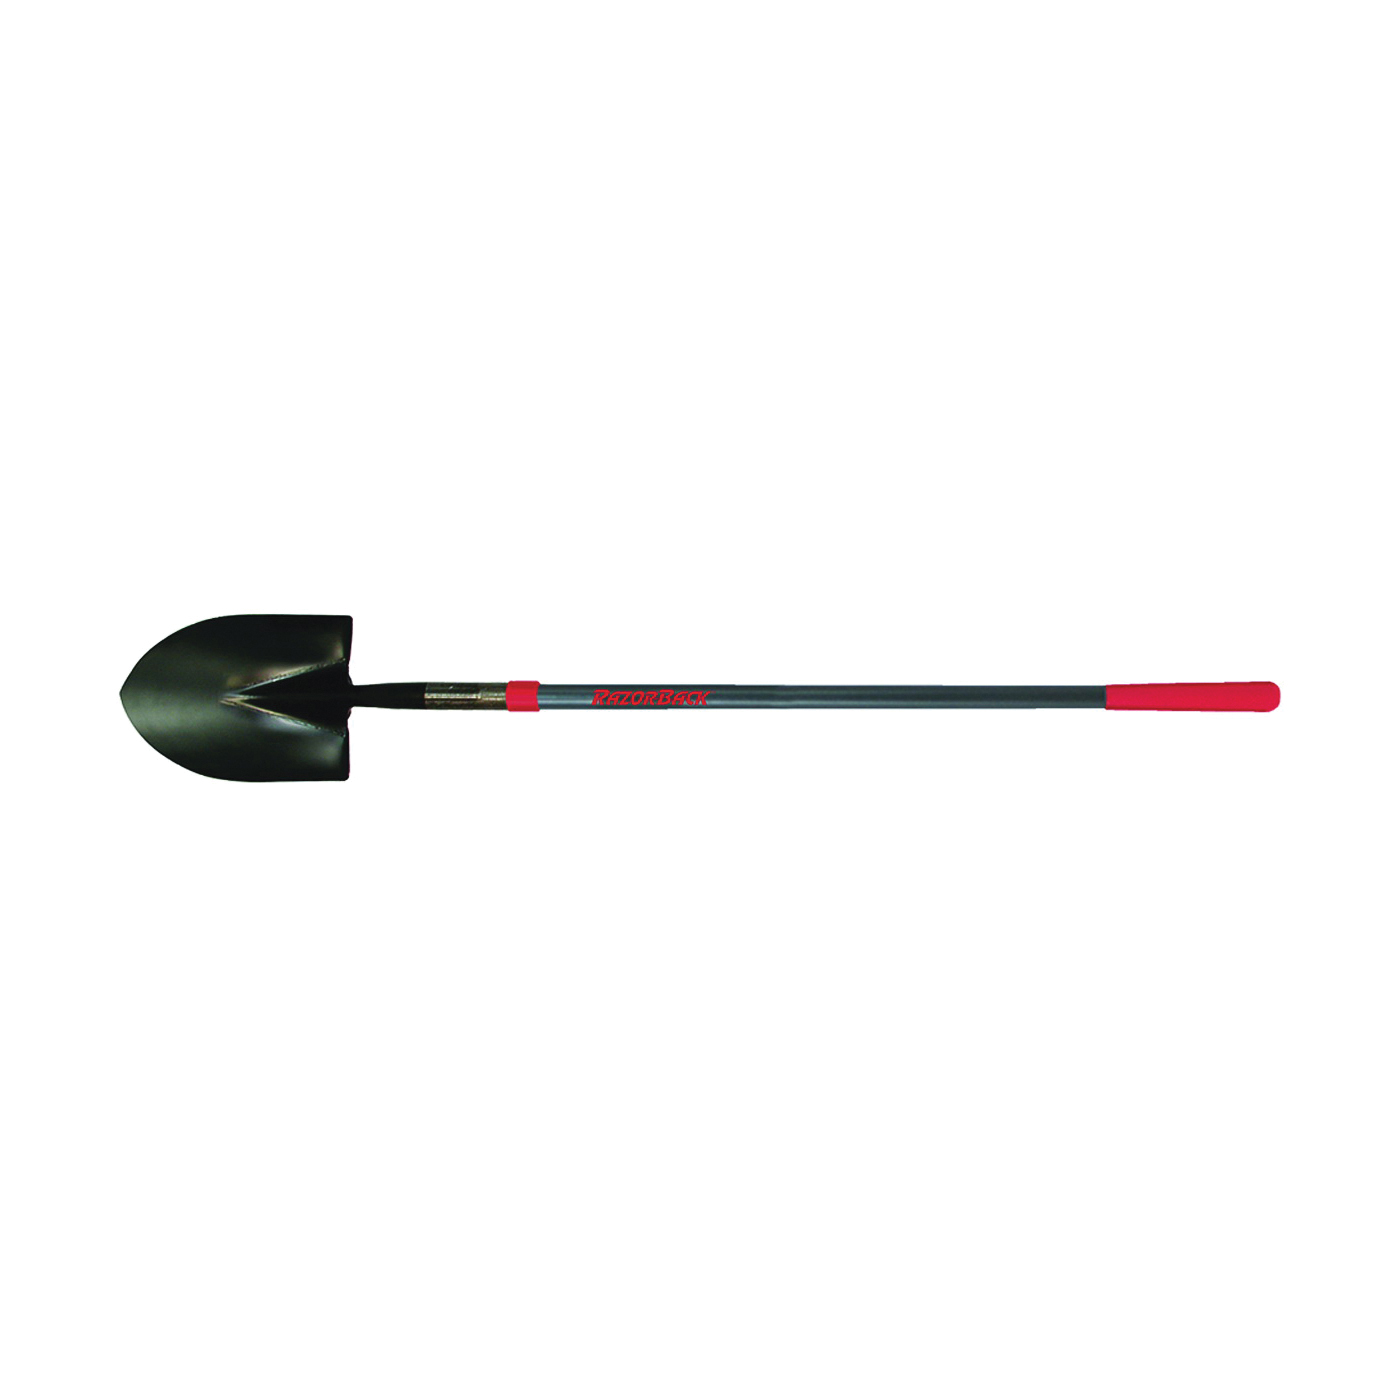 45013 Shovel with Steel Backbone, 8-5/8 in W Blade, Steel Blade, Fiberglass Handle, Cushion Grip Handle